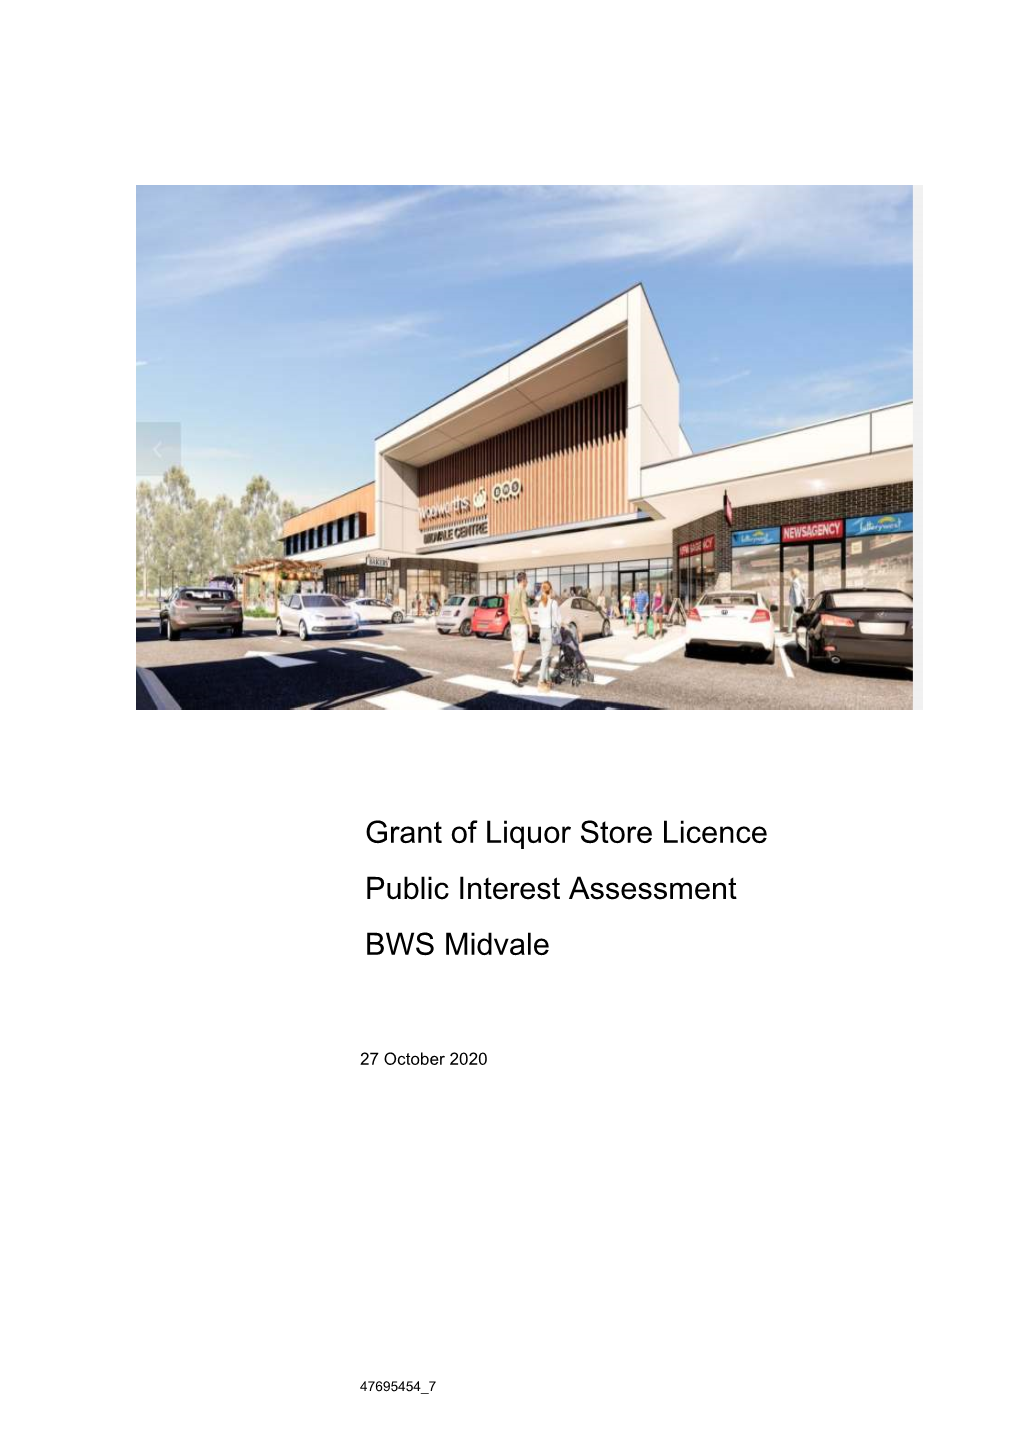 Grant of Liquor Store Licence Public Interest Assessment BWS Midvale